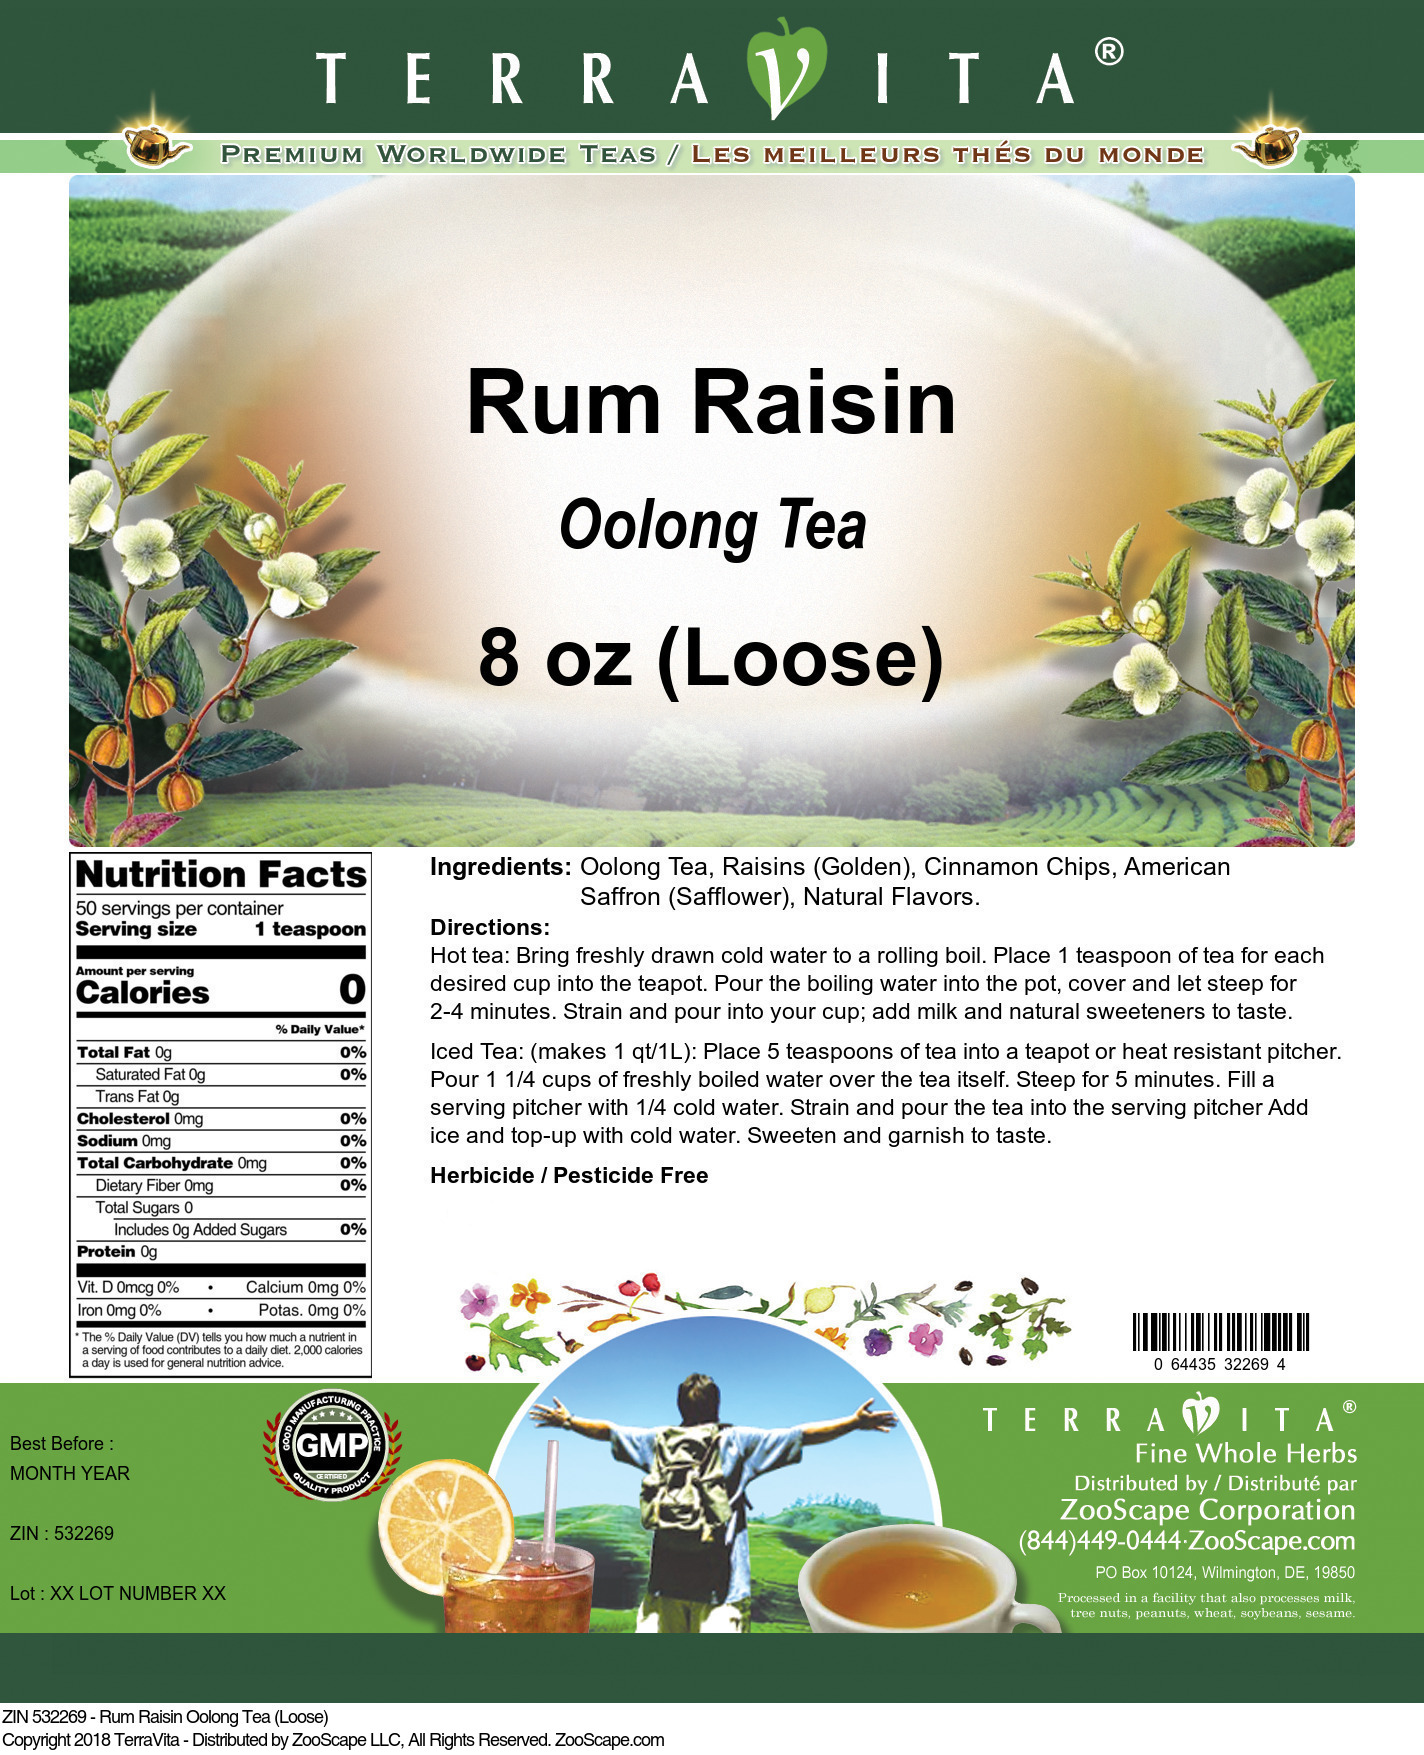 Rum Raisin Oolong Tea (Loose) - Label